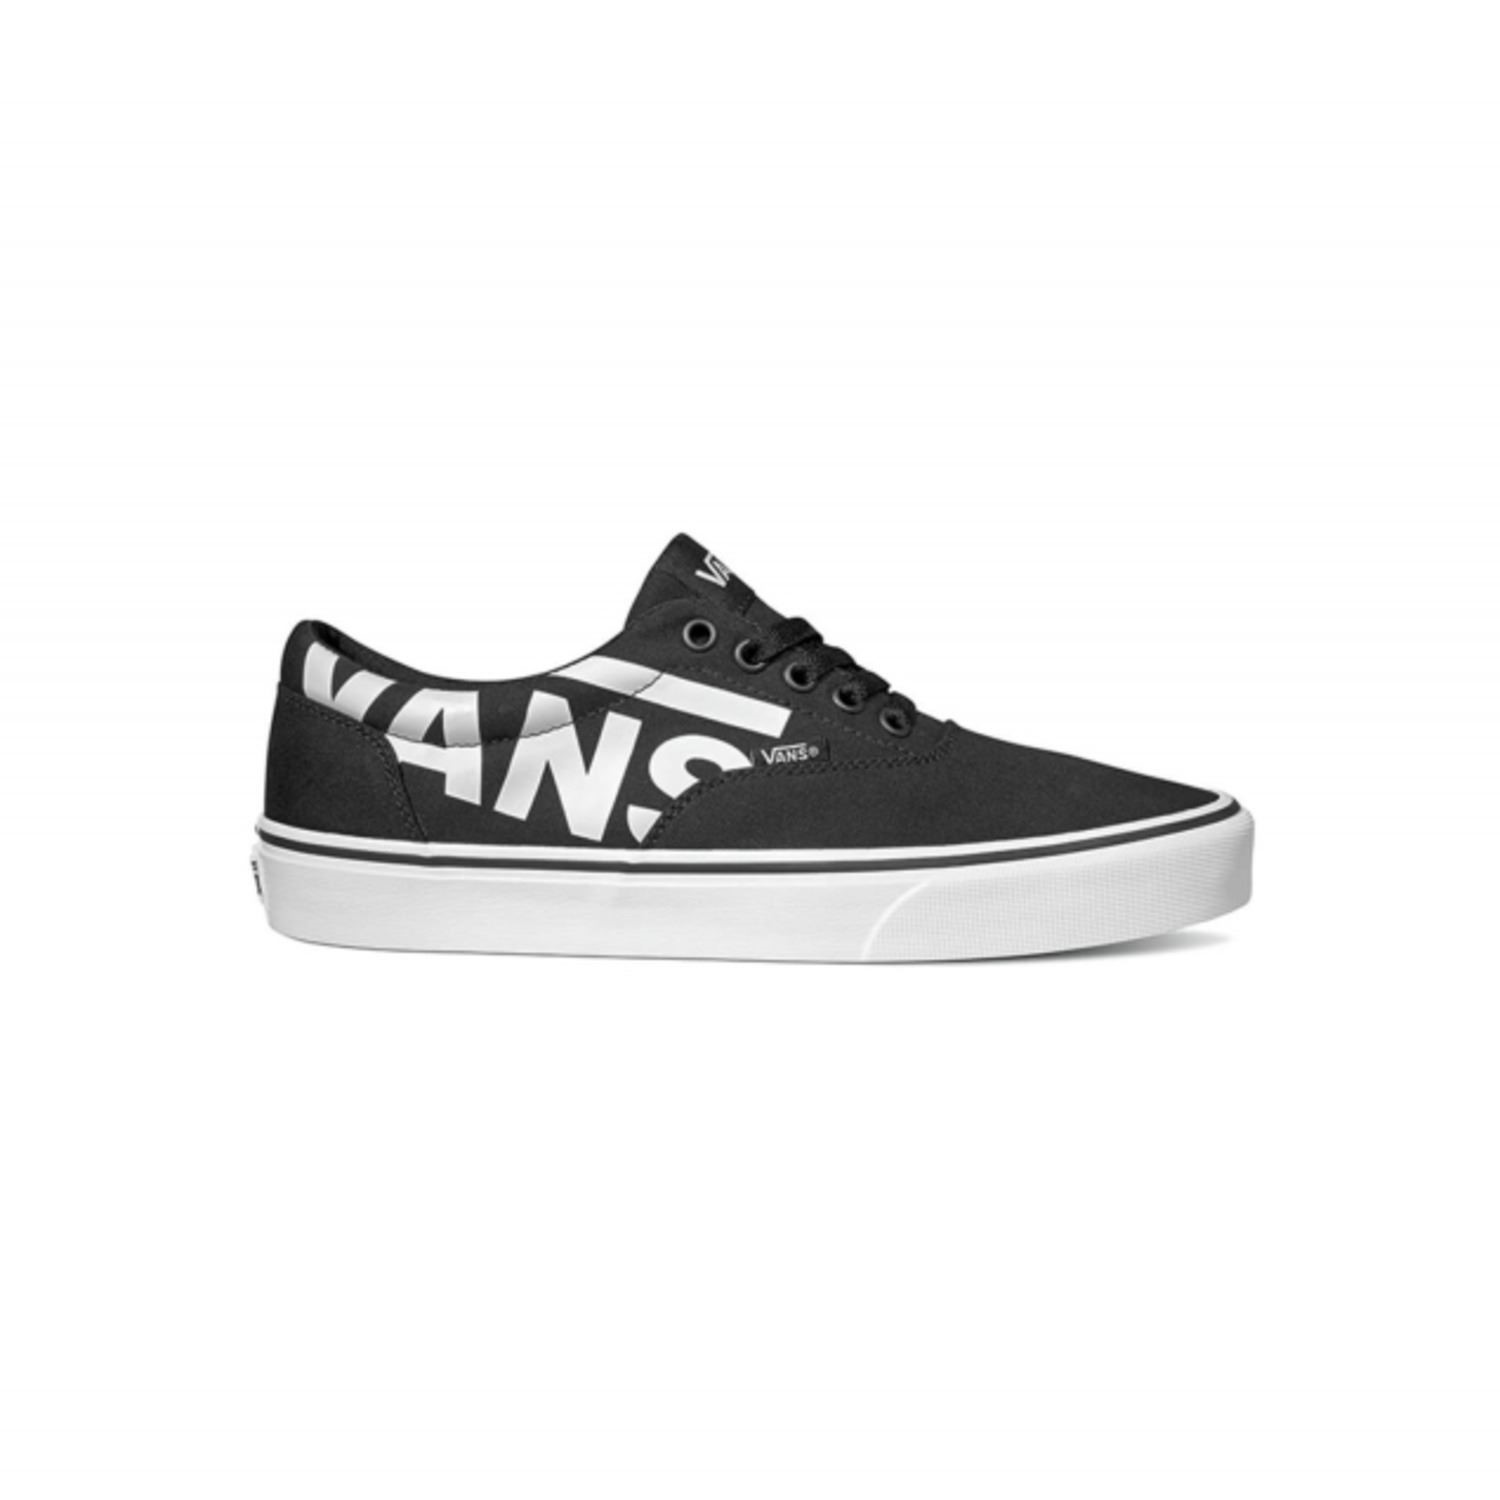 Vans Erkek Ayakkabı VN0A3MTFRYH1 (Big Logo) Black/White